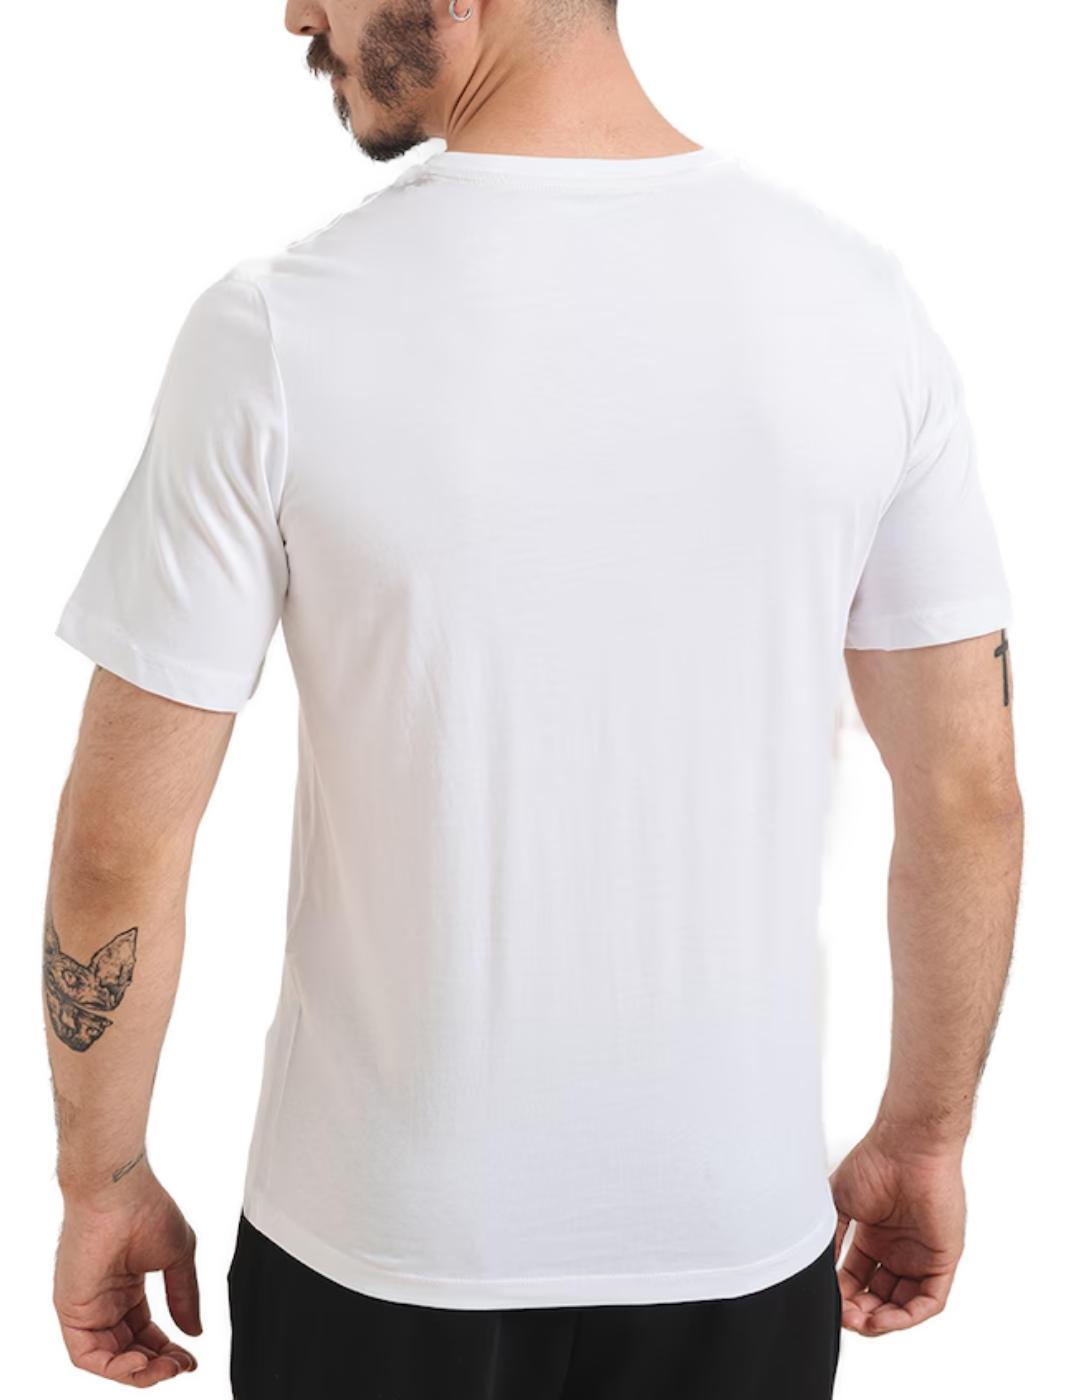 Camiseta Jack&Jones Zion blanco manga corta para hombre